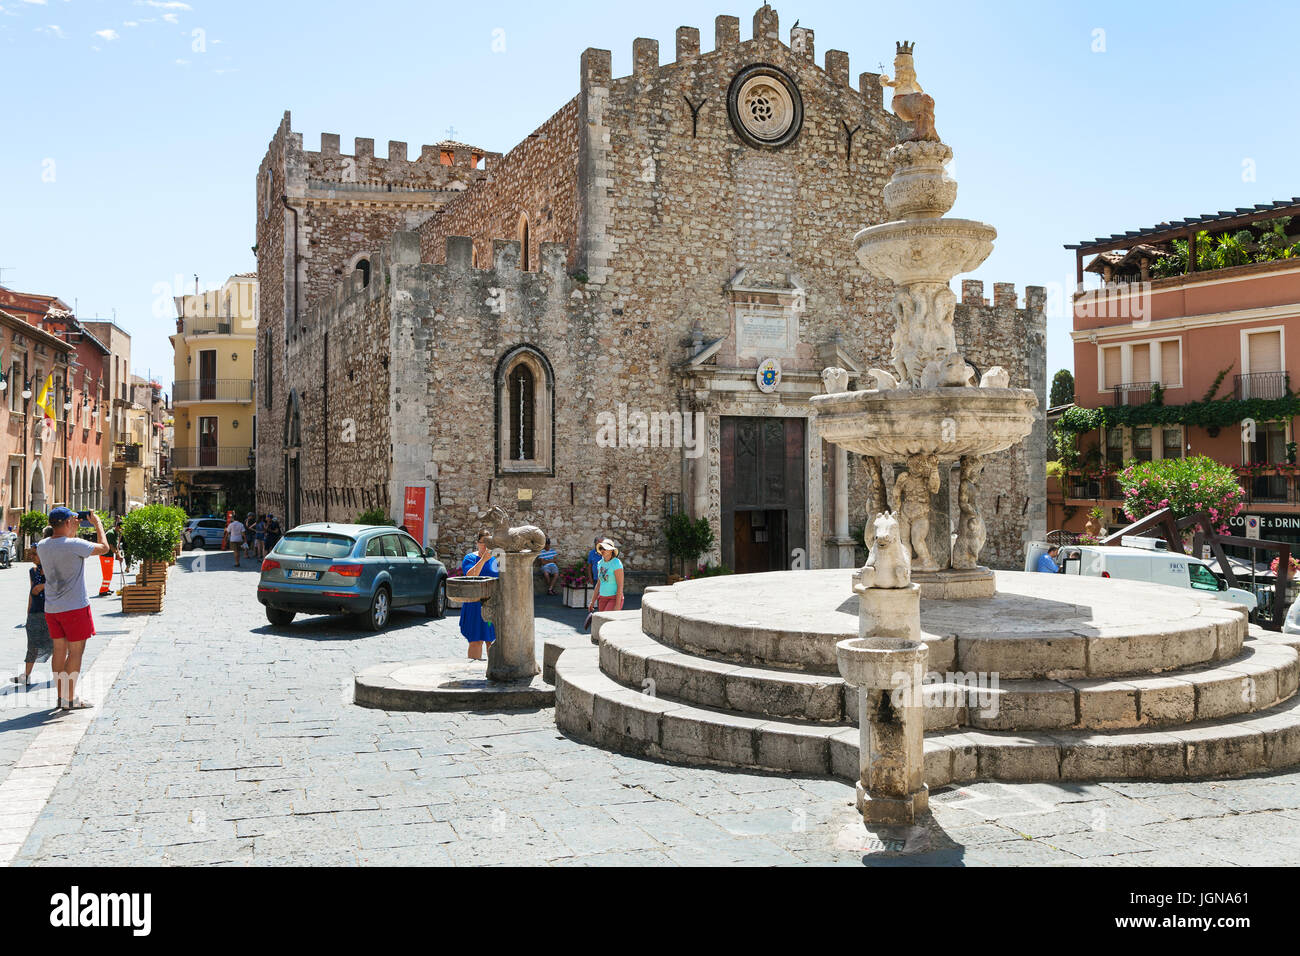 TAORMINA, ITALY - JUNE 29, 2017: tourists on Piazza dell Duomo near fountain in Taormina city. Taormina is resort town on Ionian Sea in Sicily Stock Photo